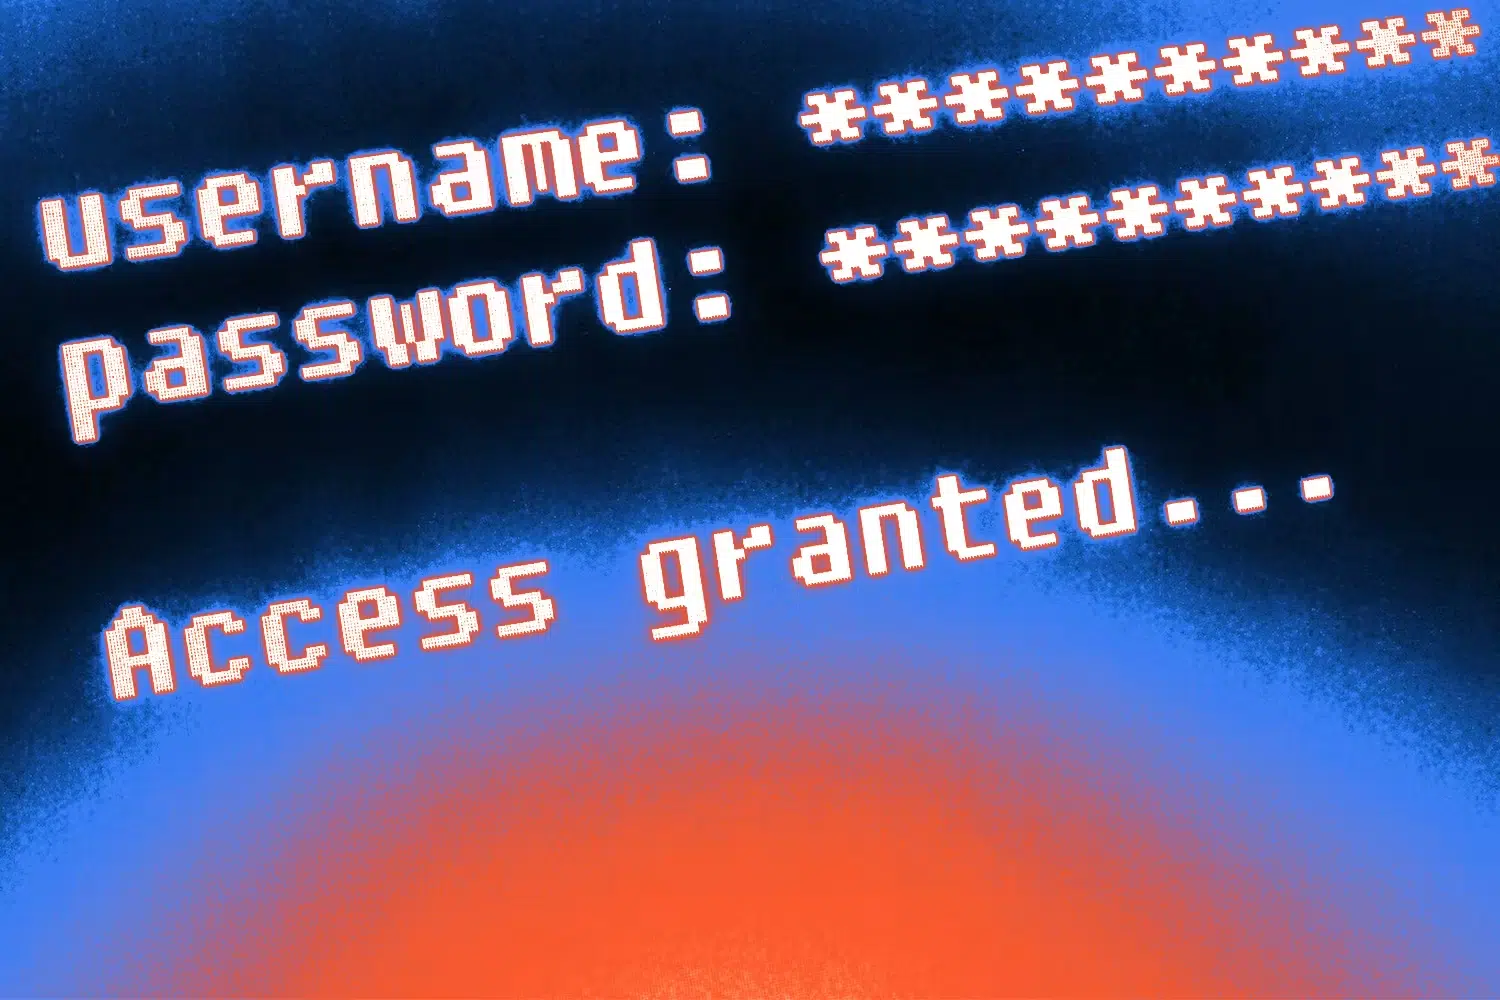 usename, password on computer screen